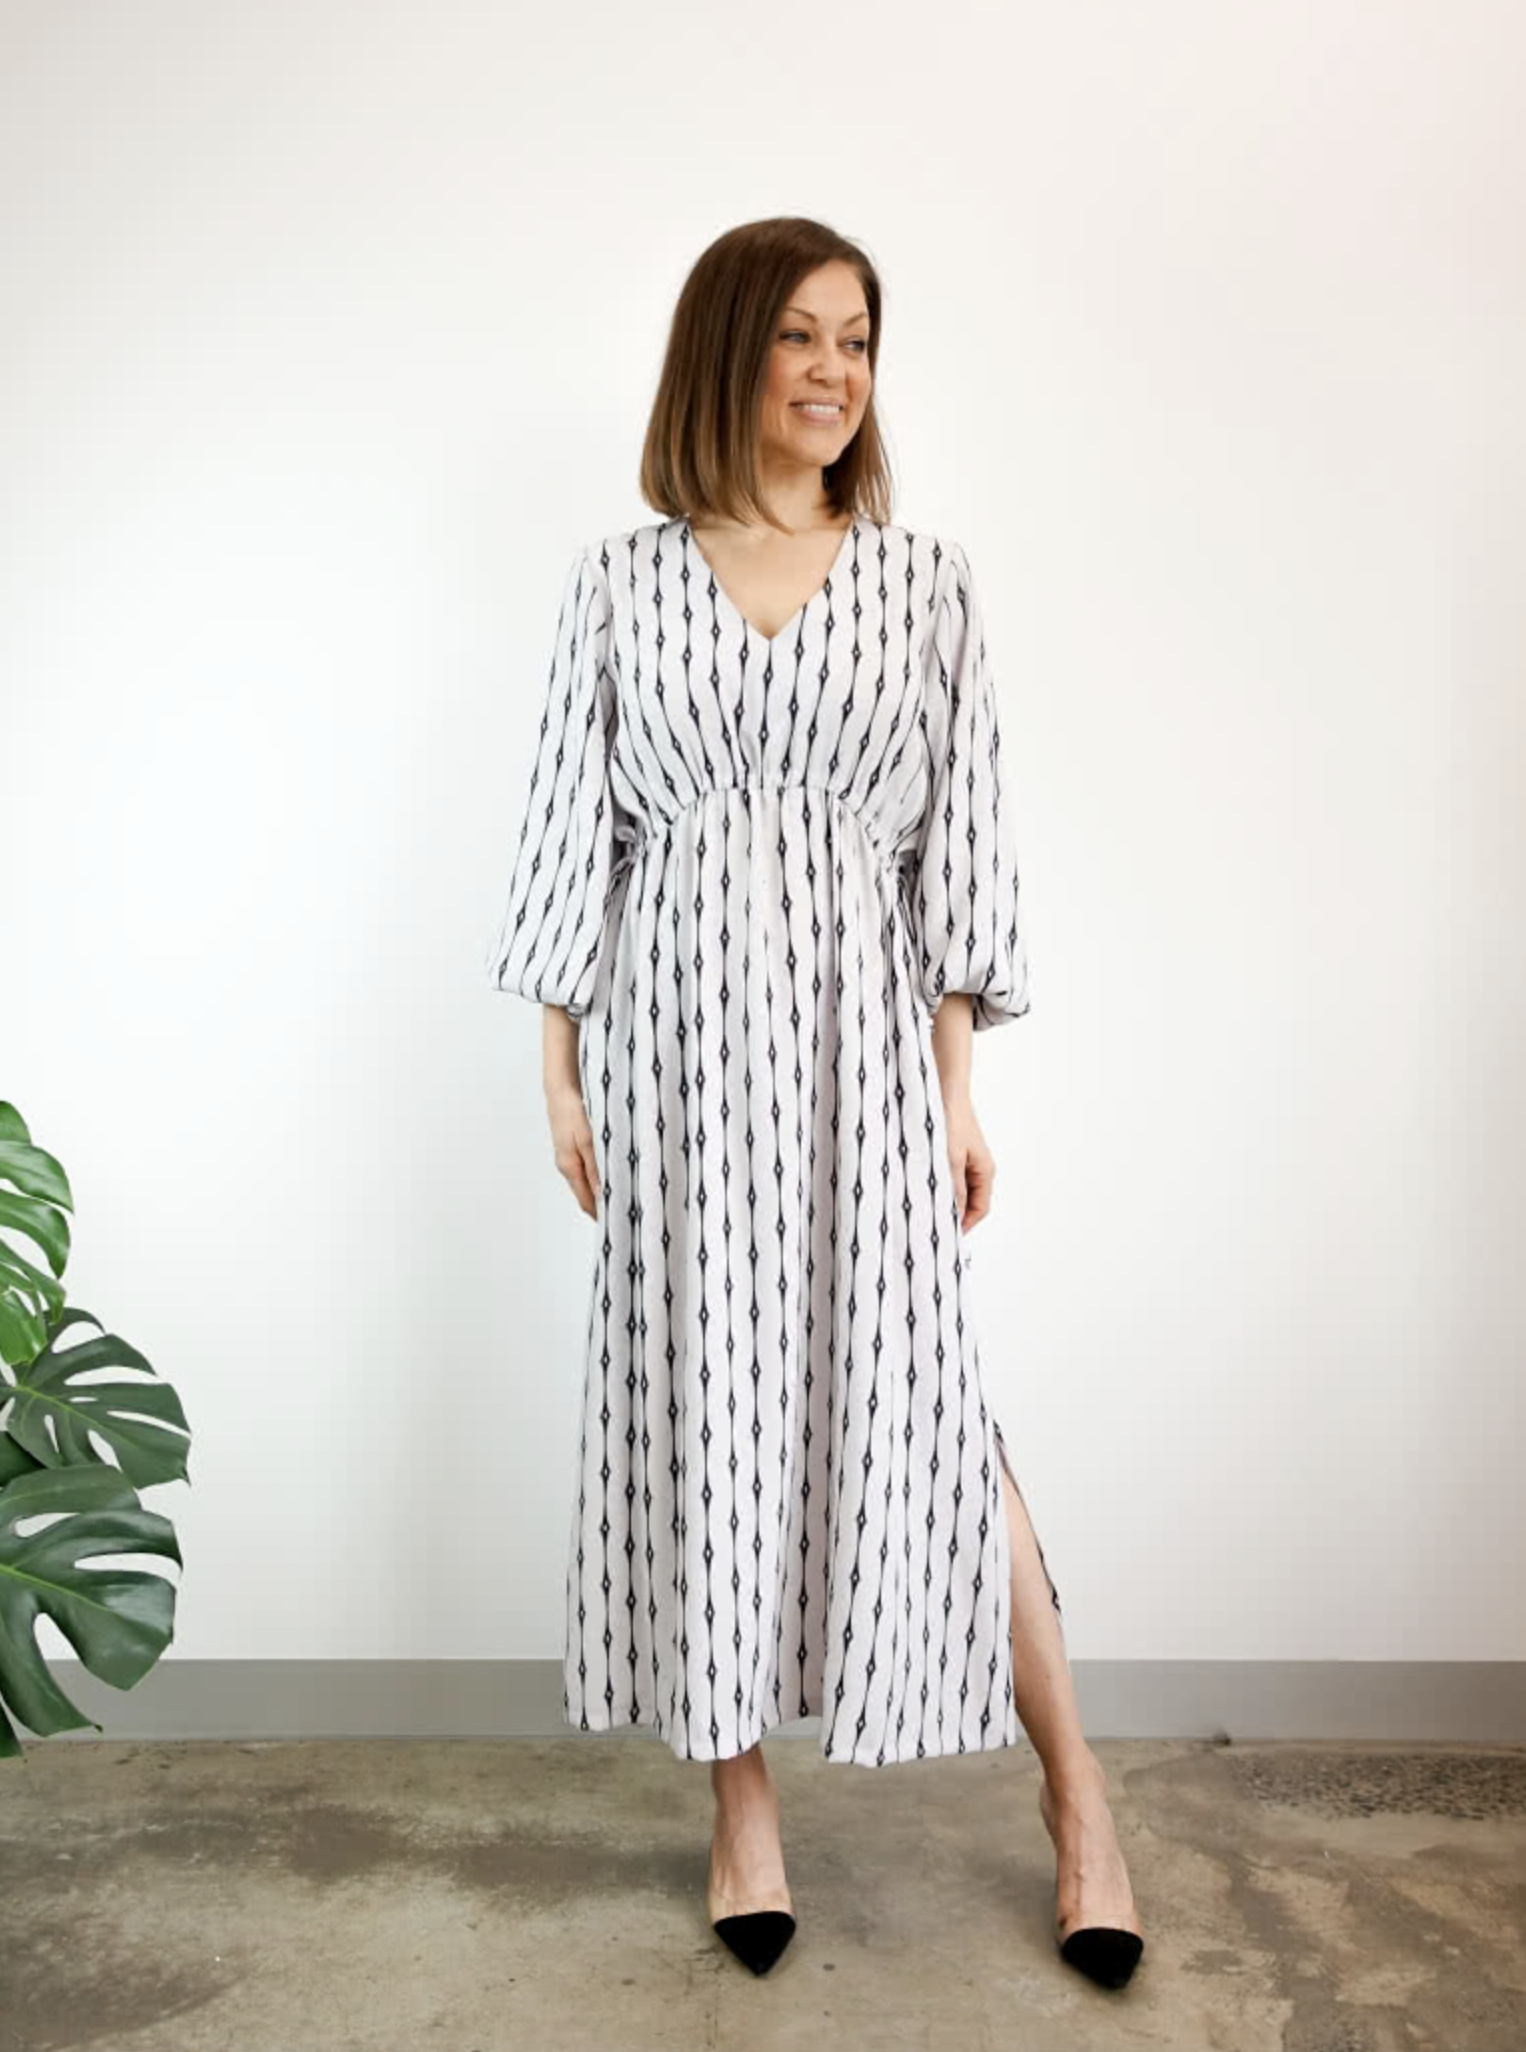 Style ARC - Naomi Woven Dress (Sizes 4 - 16)  Sewing Pattern